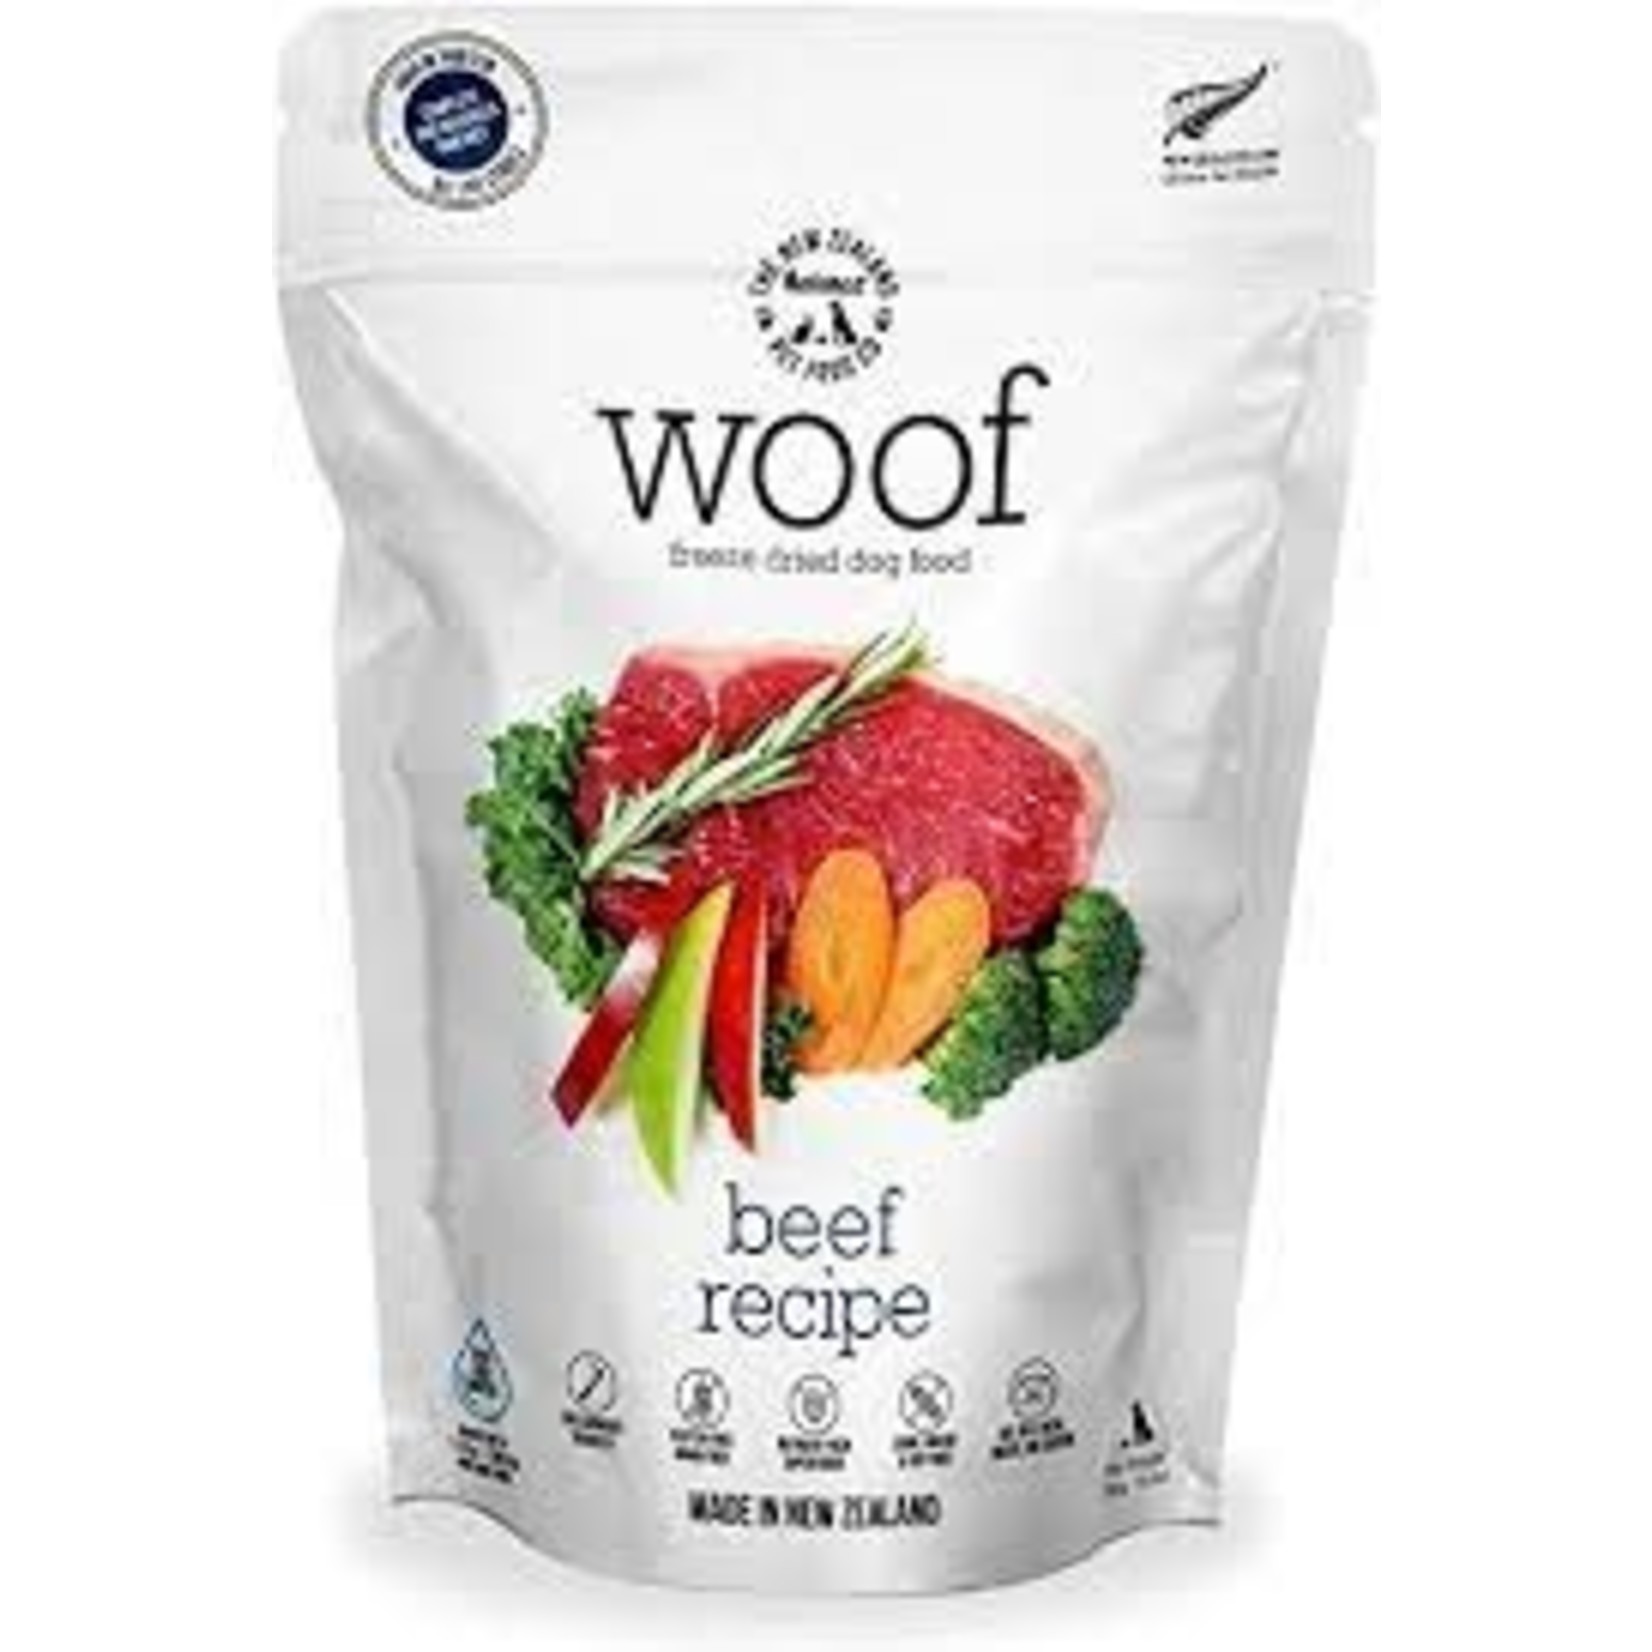 The New Zealand Pet Food Co Woof - Freeze Dried Dog Food